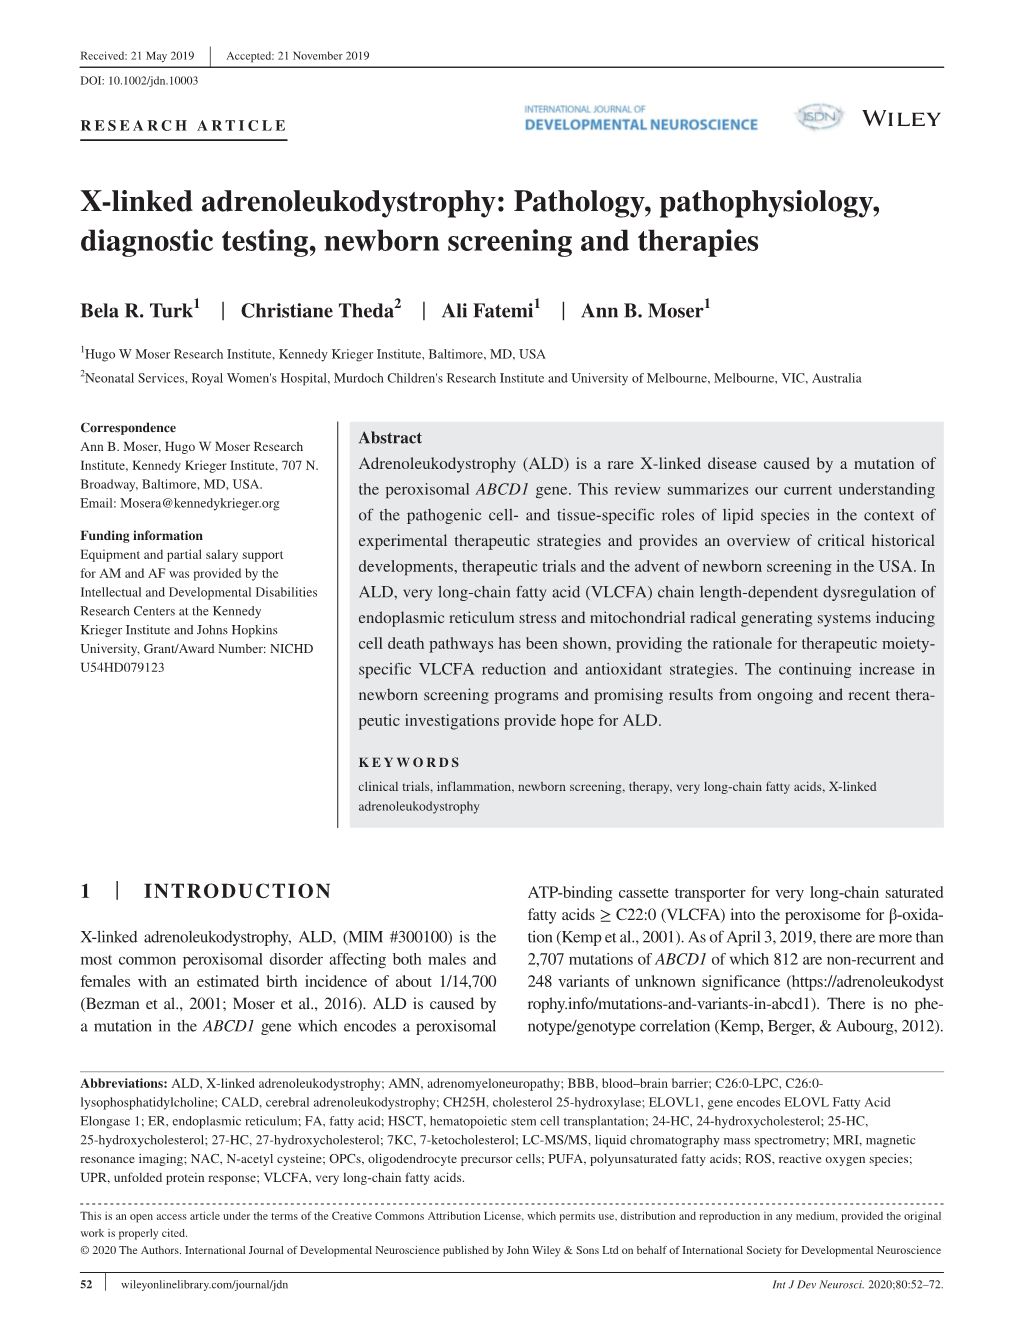 Linked Adrenoleukodystrophy: Pathology, Pathophysiology, Diagnostic Testing, Newborn Screening and Therapies